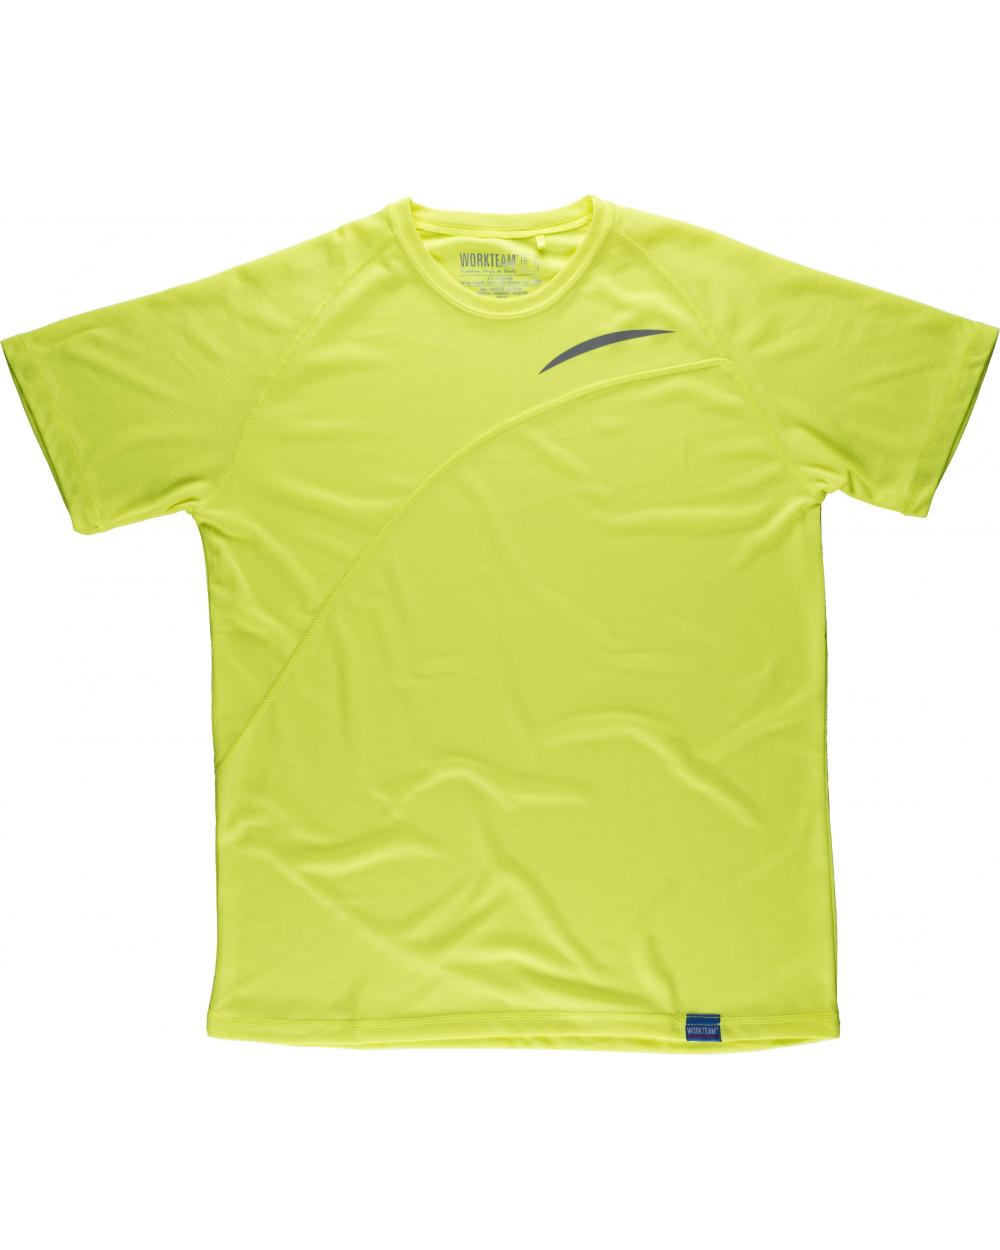 Comprar Camiseta tecnica colores fluor S6610 Amarillo AV workteam delante